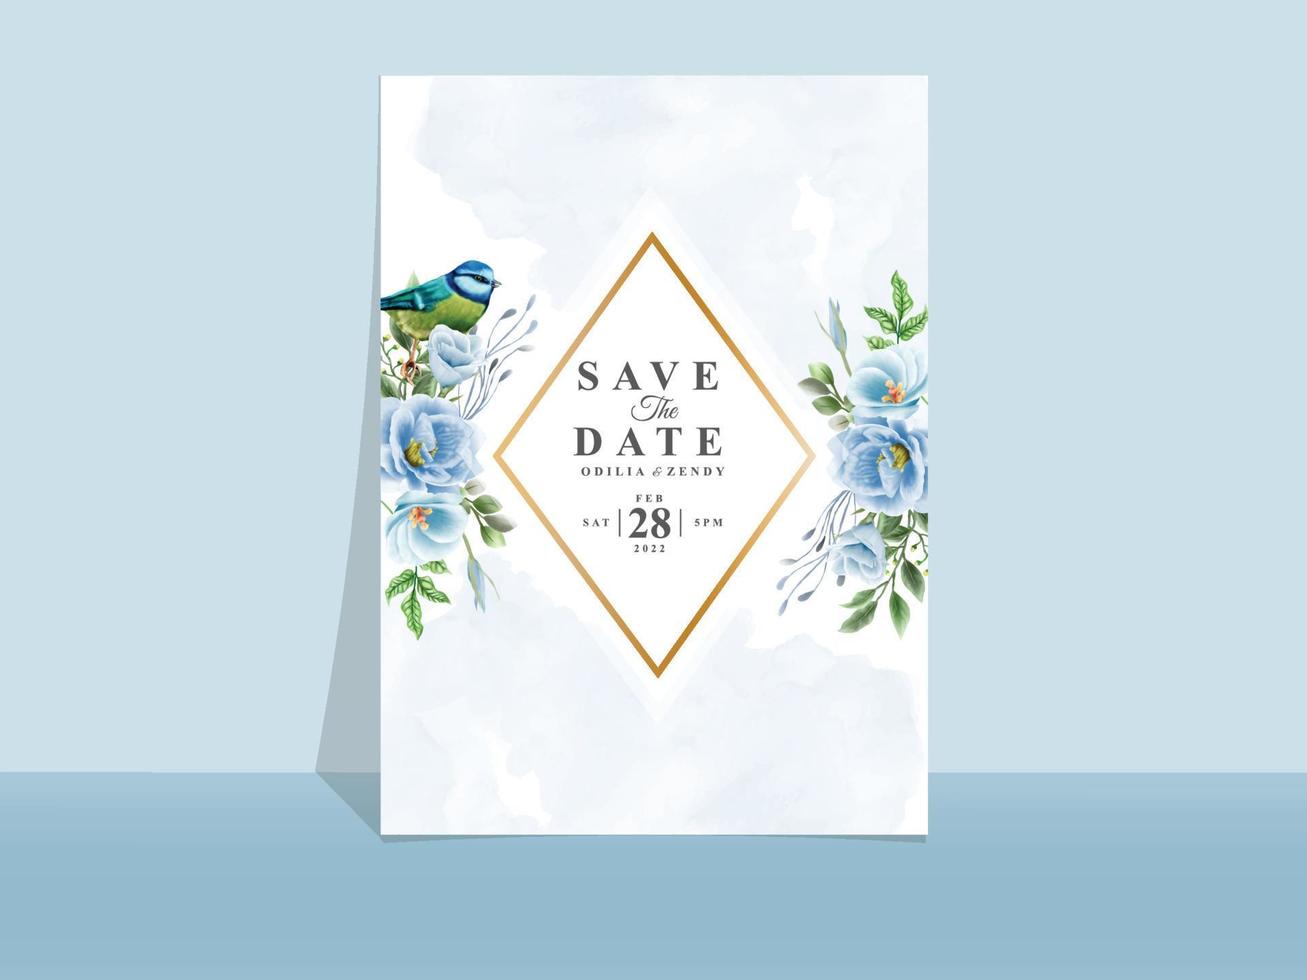 Wedding invitation card template blue flowers theme vector